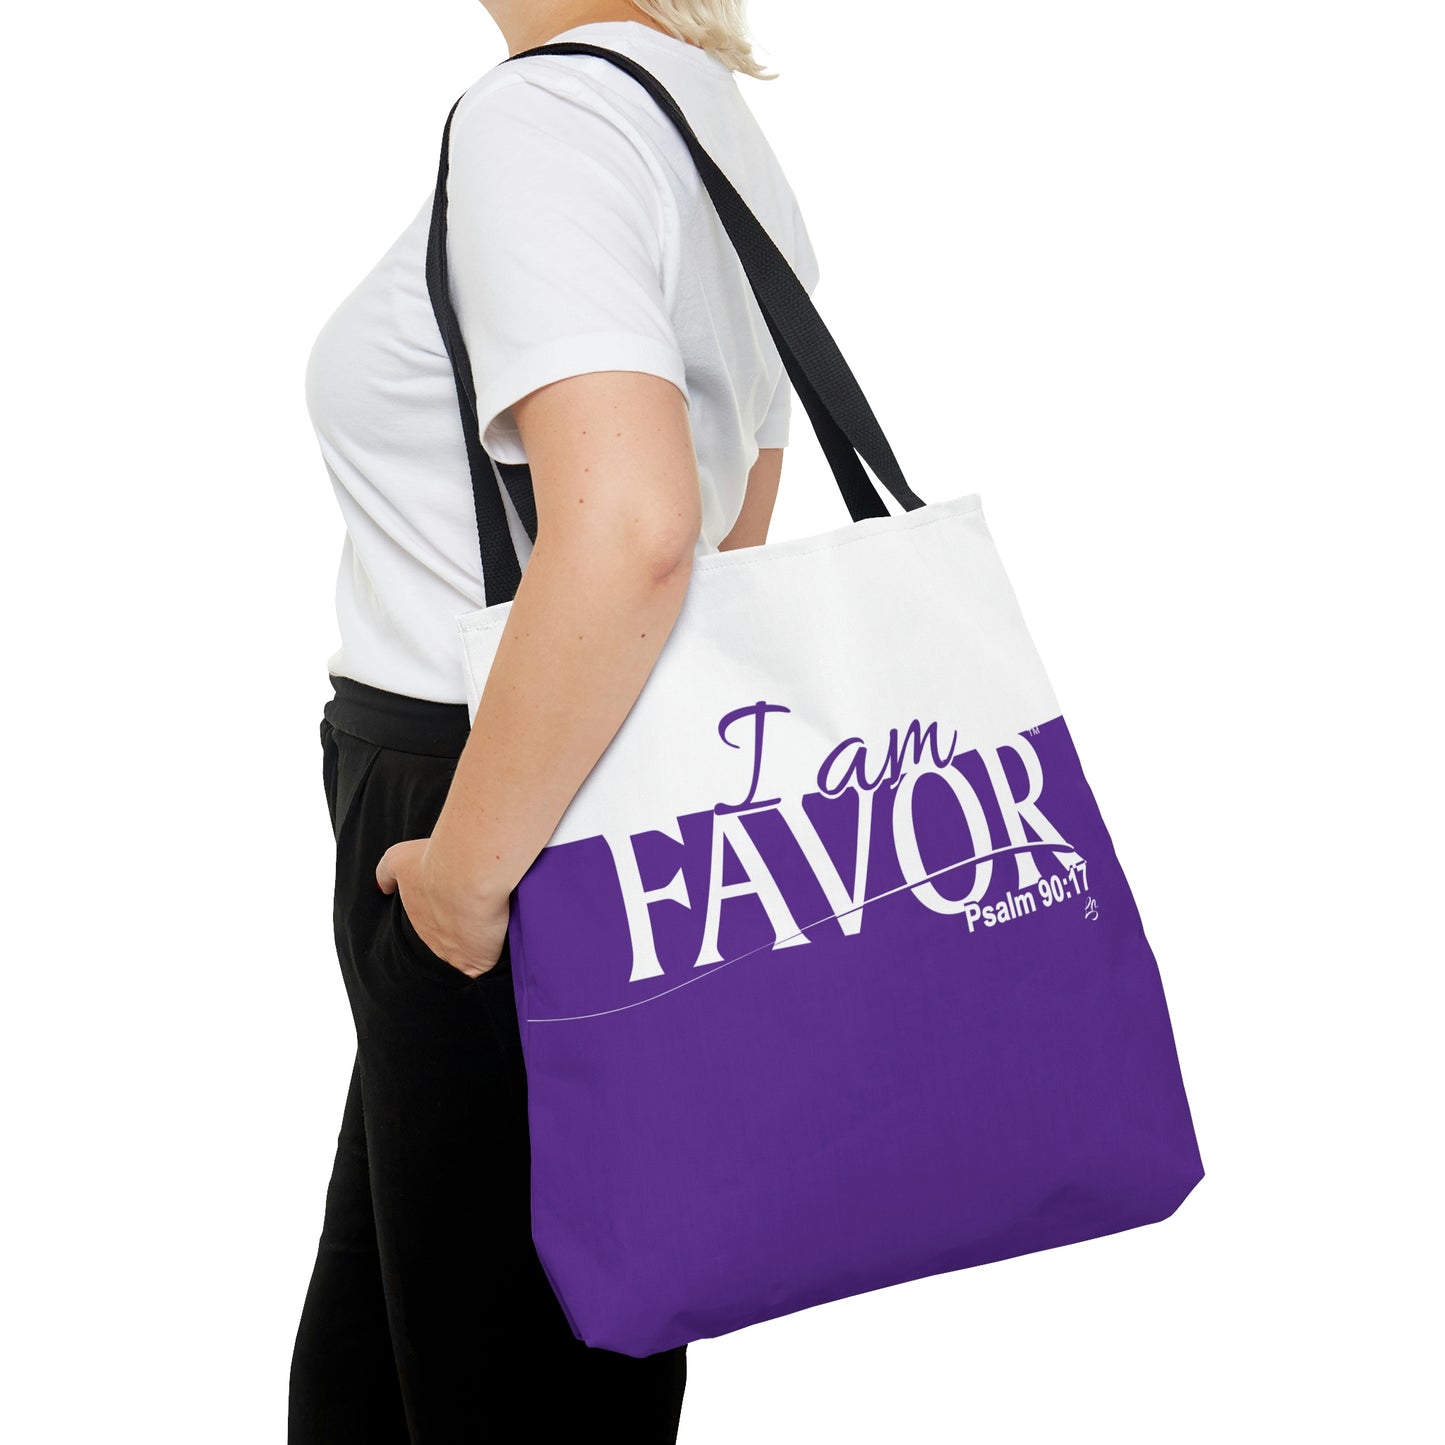 I am FAVOR Tote Bag (PURPLE)